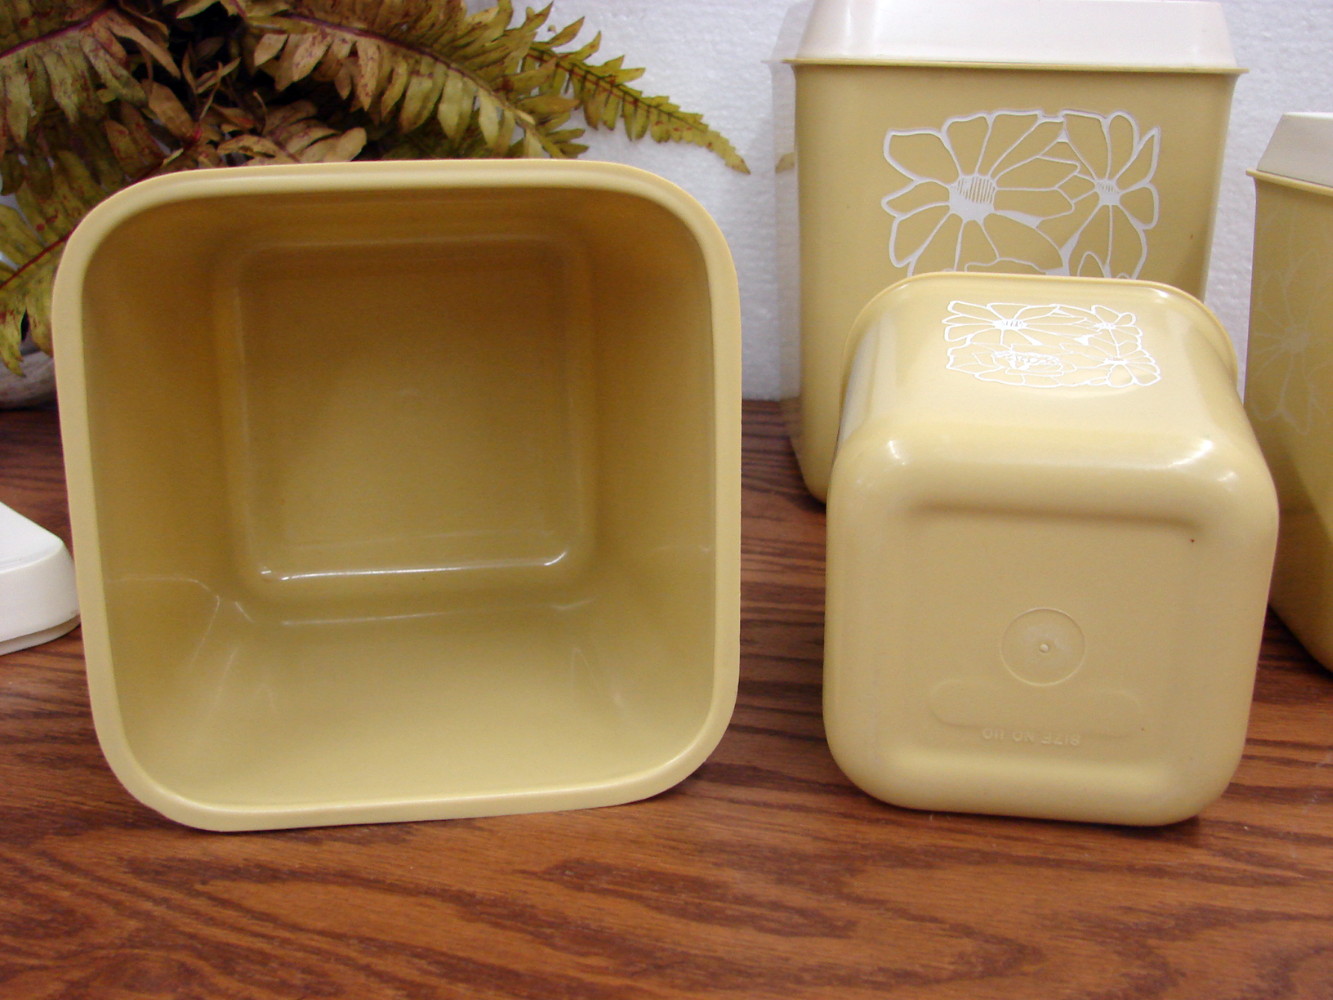 Vintage MCM Mustard Yellow Canister Set Baking Jars w/ Fruit Decals – Shop  Cool Vintage Decor